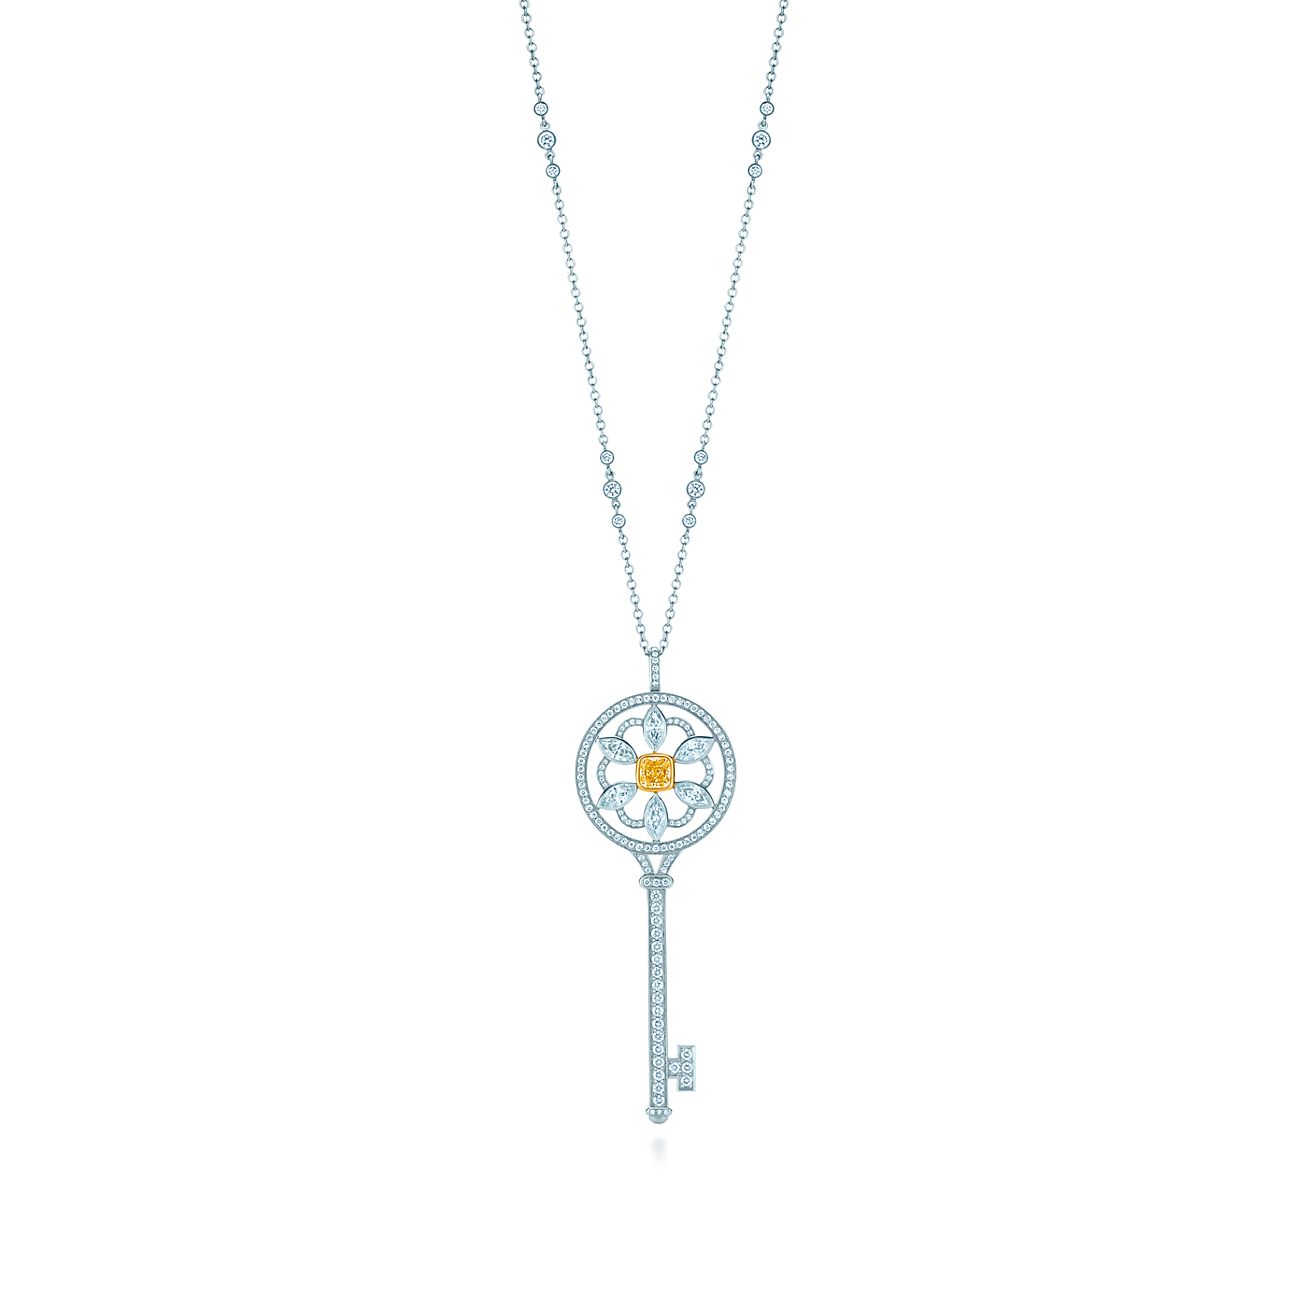 Best Tiffany Keys Round Star Key Pendant Yellow Diamond For